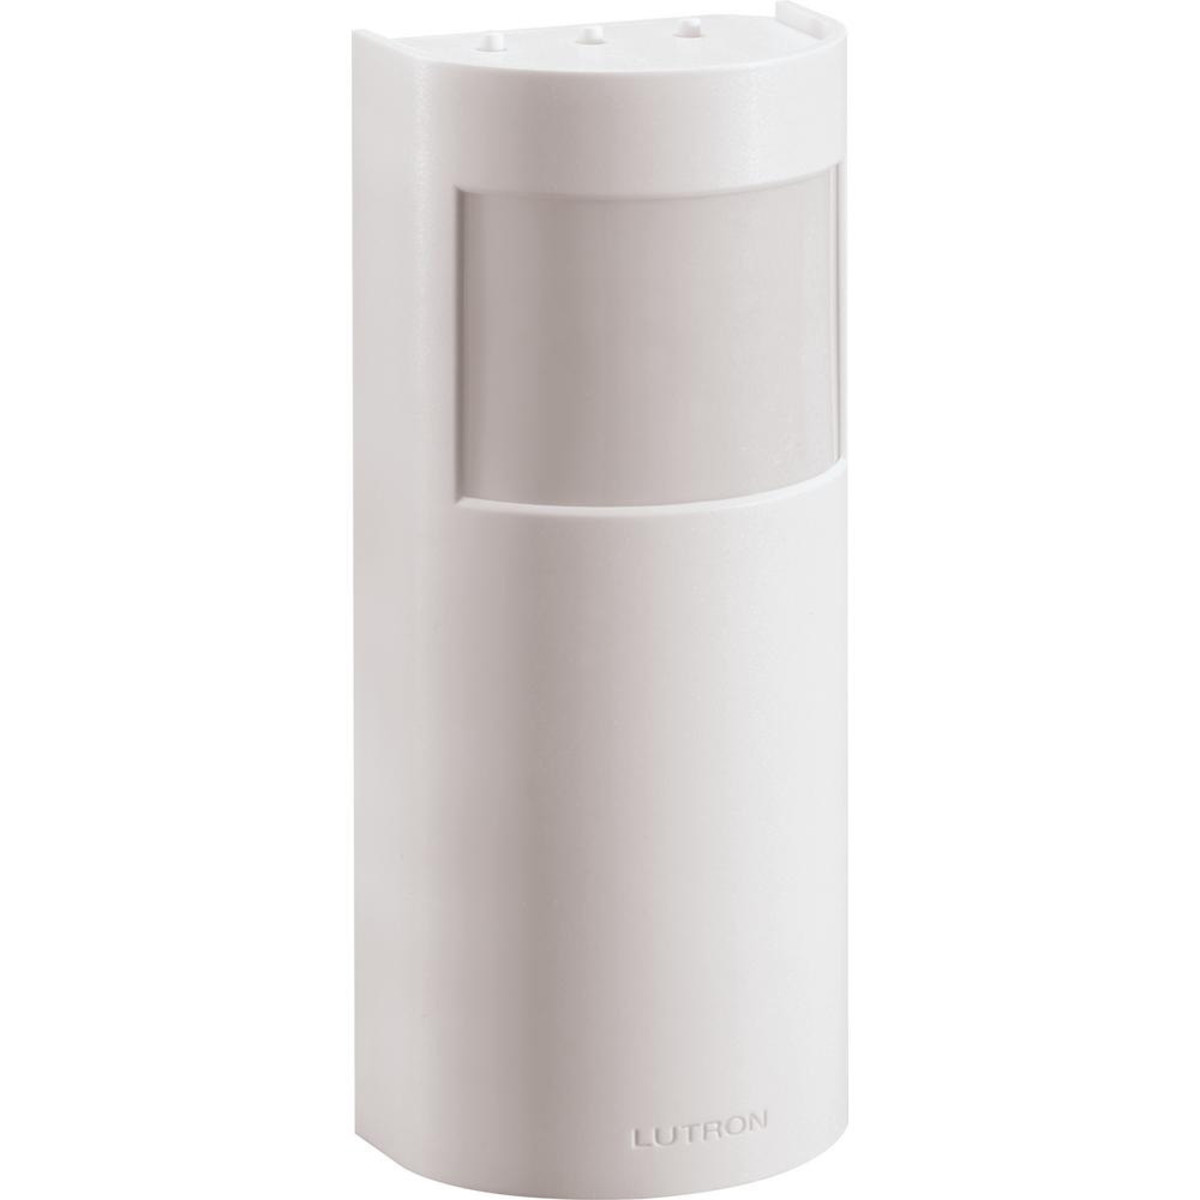 LUTRON Caseta Smart Occupancy Sensor - White PD-OSENS-WH